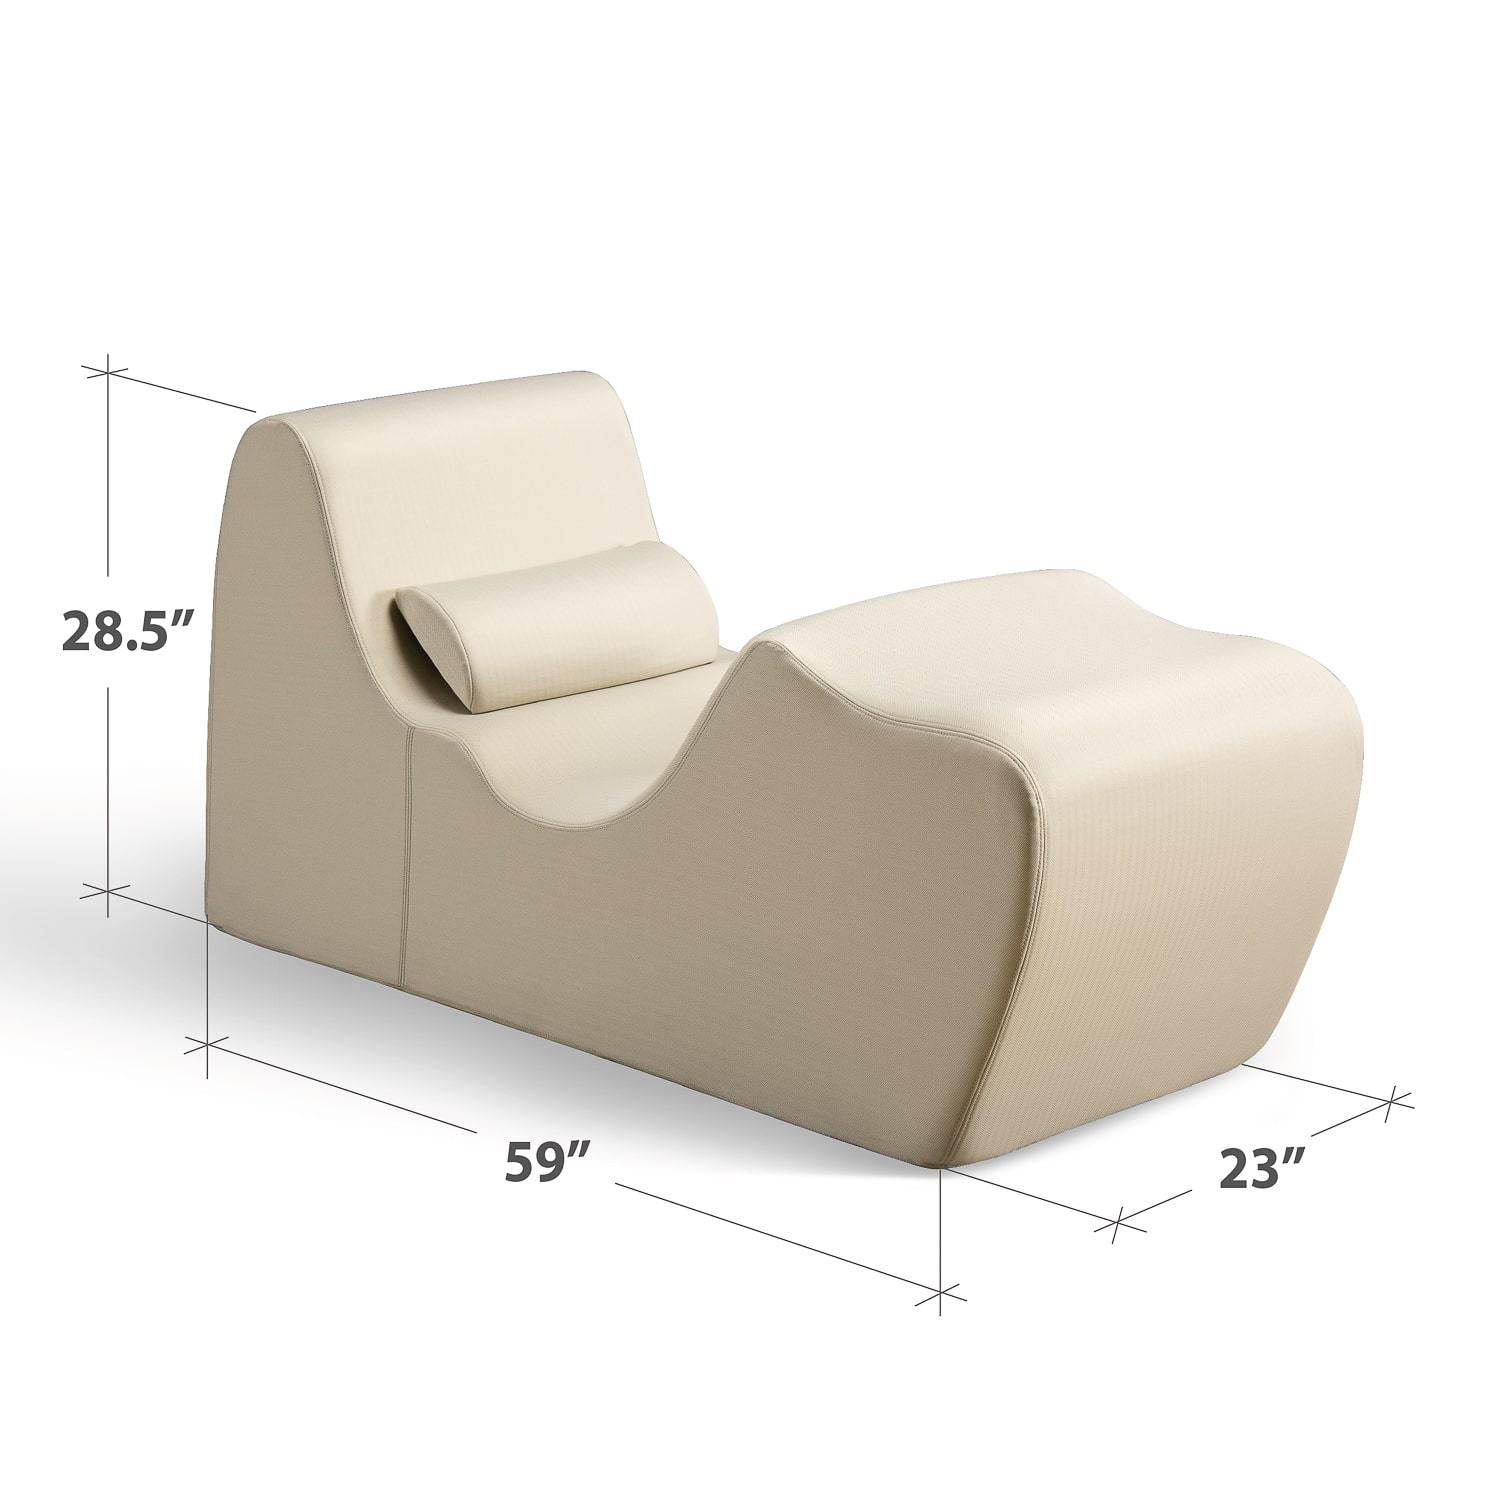 Lotus Zero Gravity Chaise Lounger dimensions